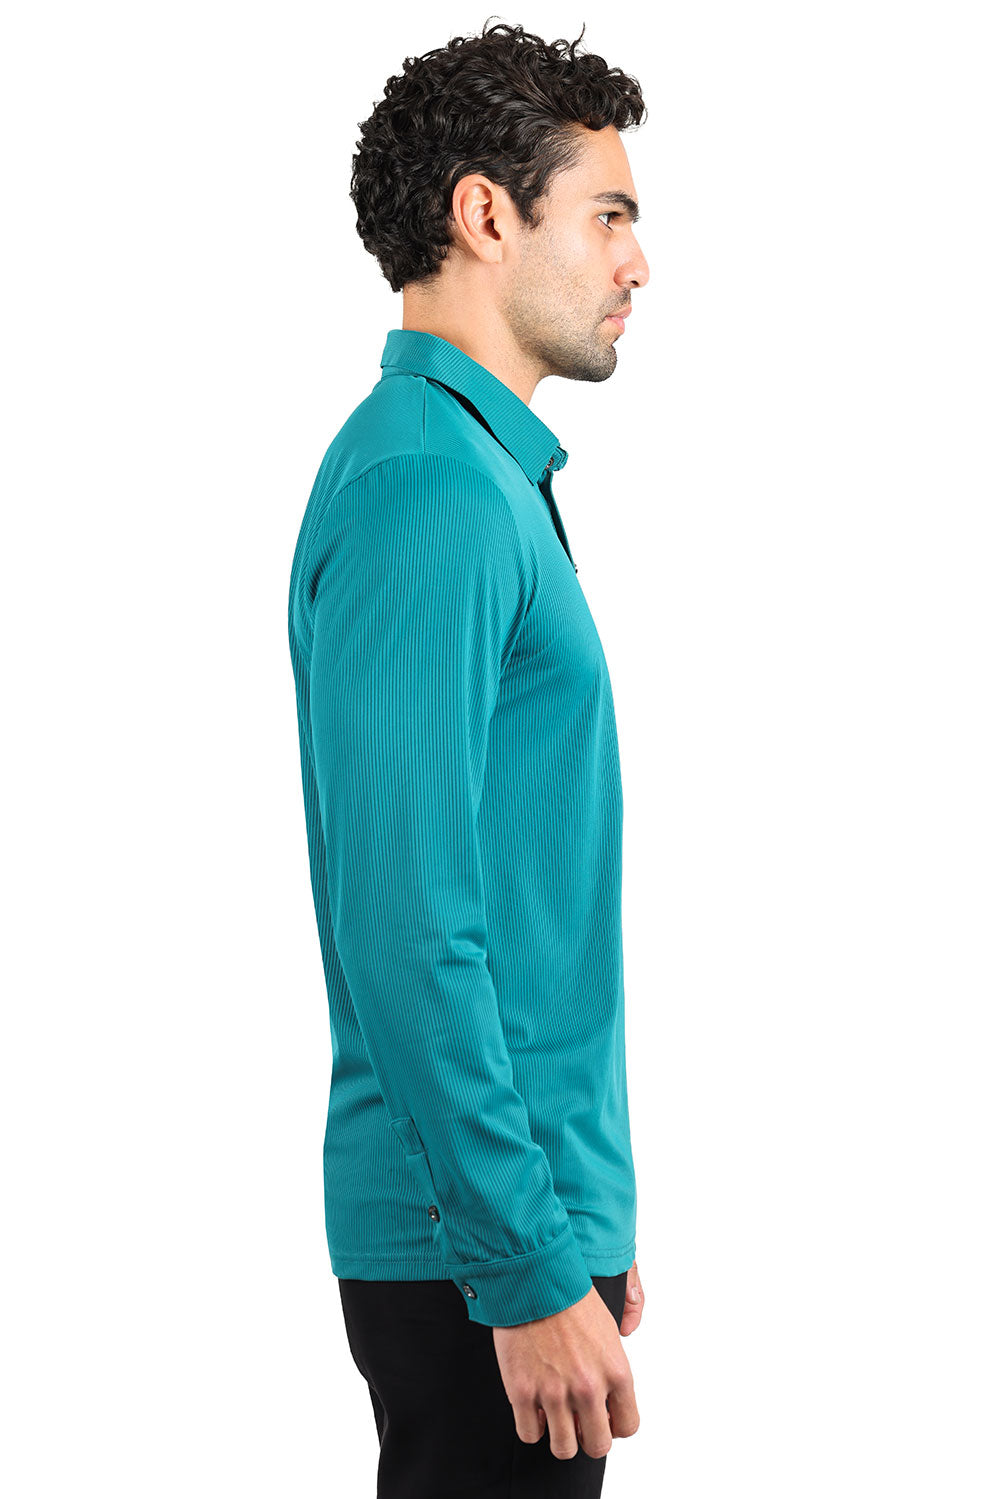 Barabas Men's Premium Solid Color Long Sleeve Polo Shirts 2DPL30 Teal